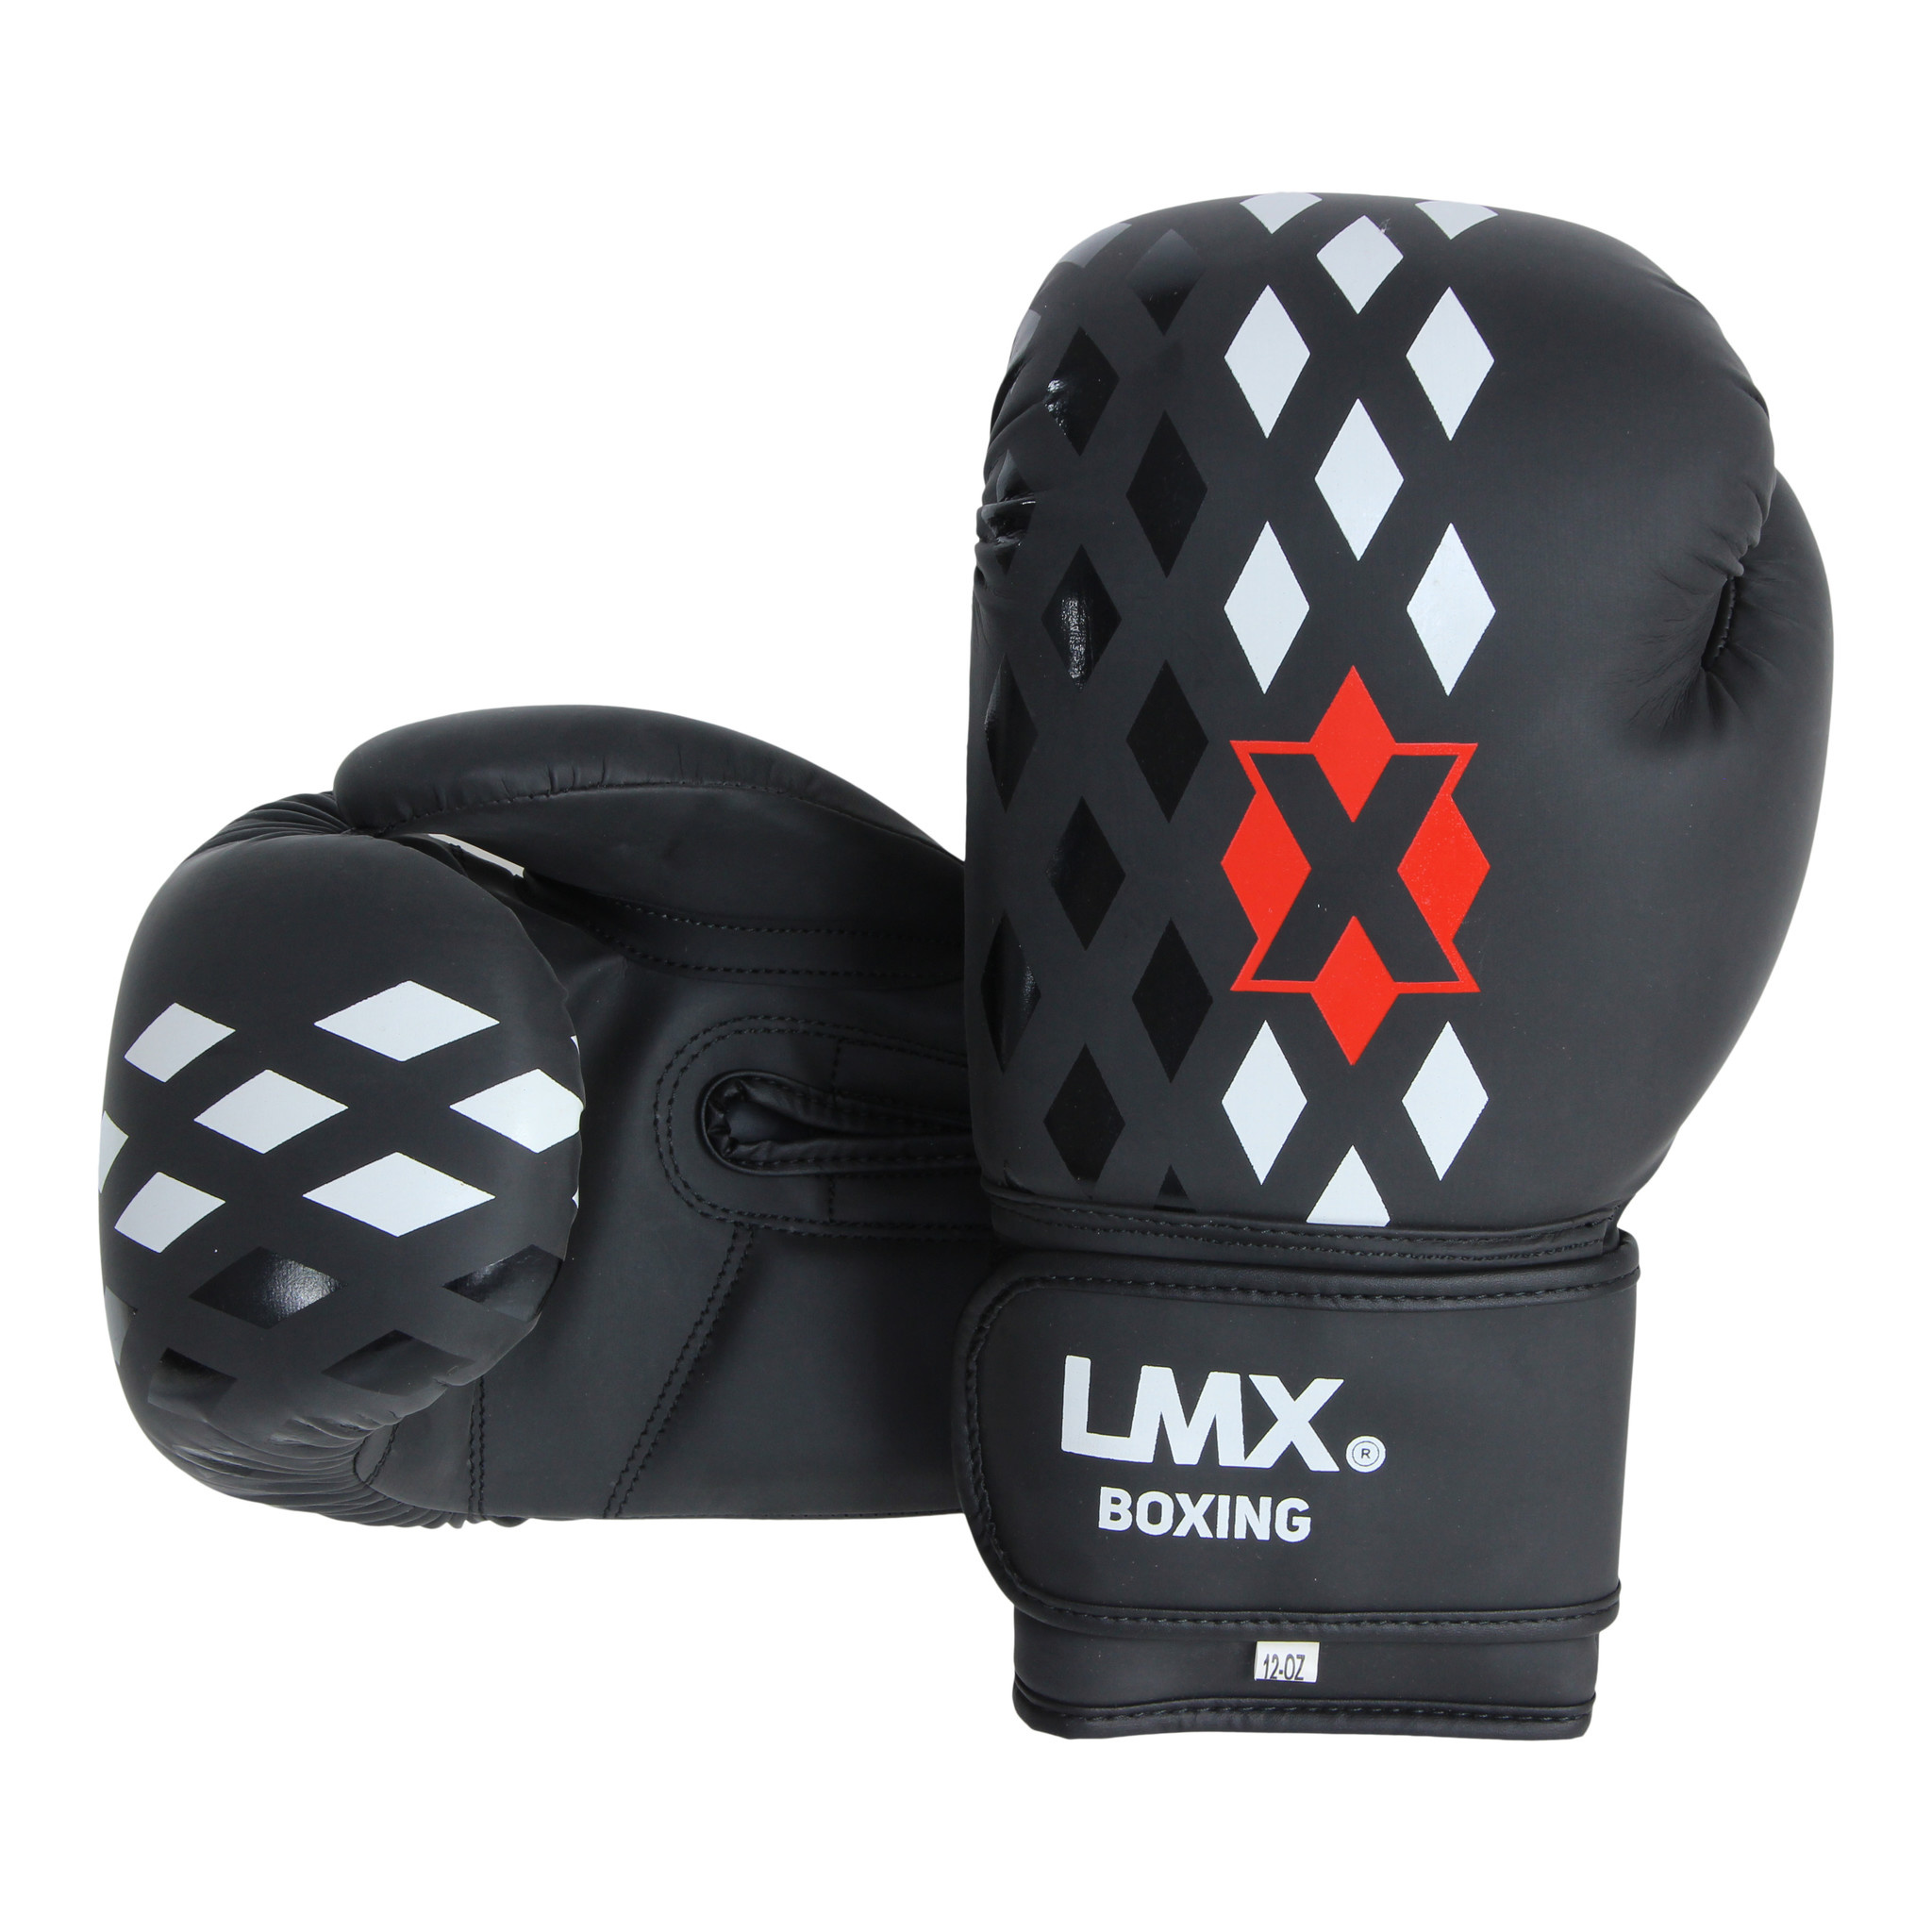 Lifemaxx LMX1553 Bokshandschoenen